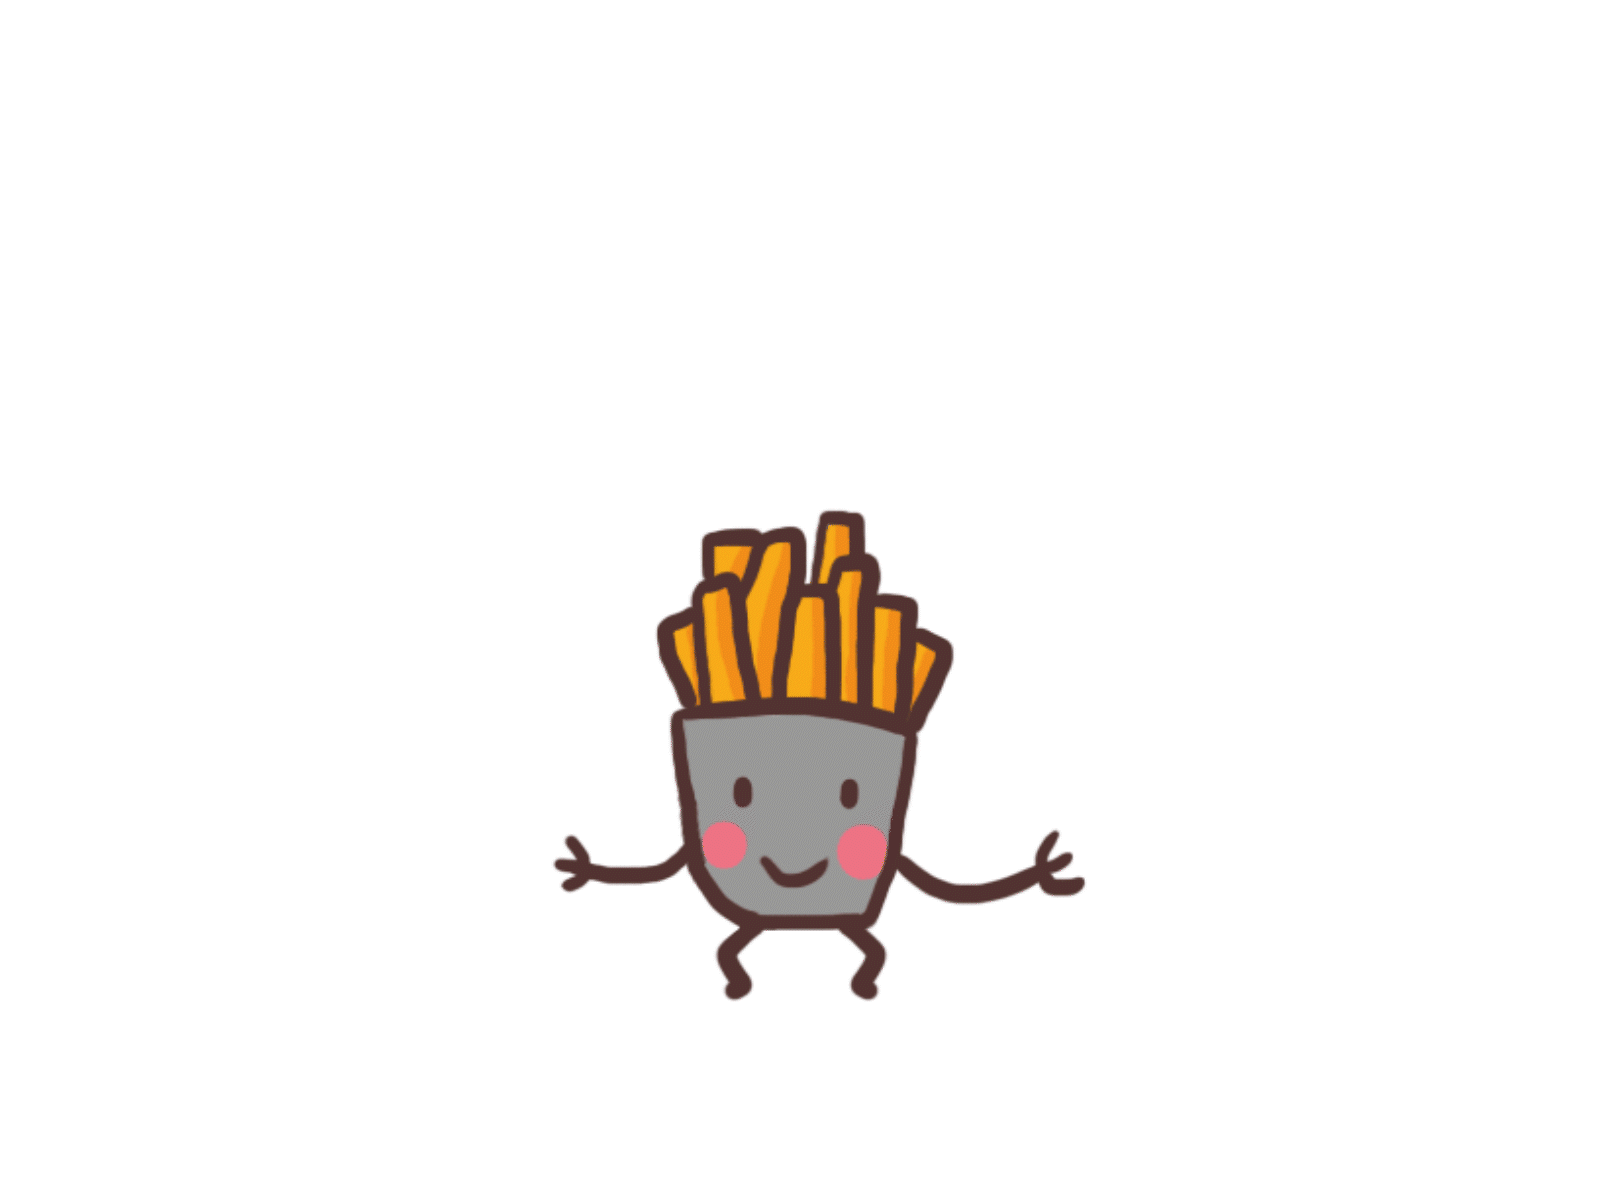 Fries potatoes jump